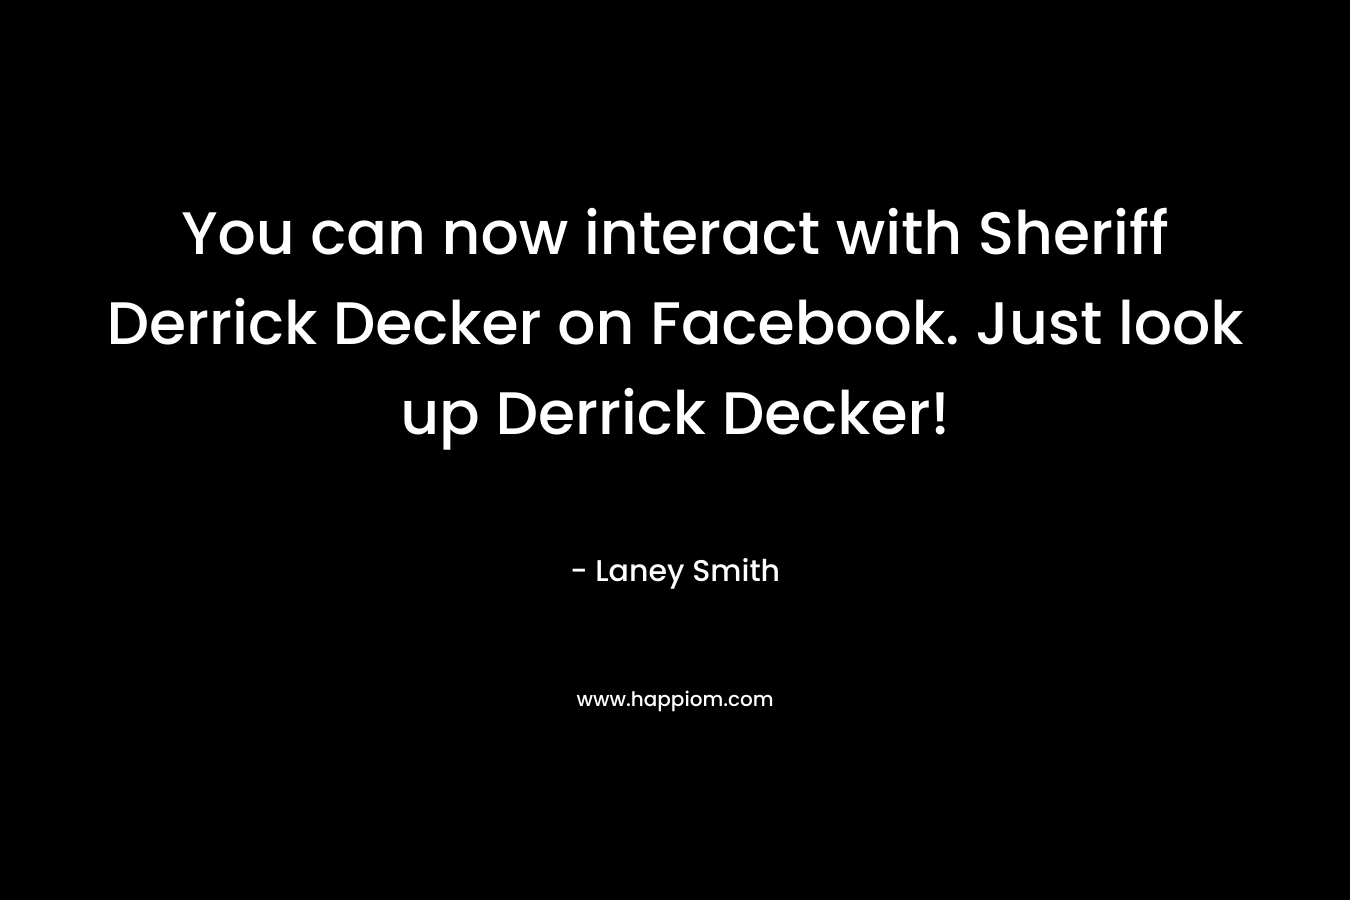 You can now interact with Sheriff Derrick Decker on Facebook. Just look up Derrick Decker!